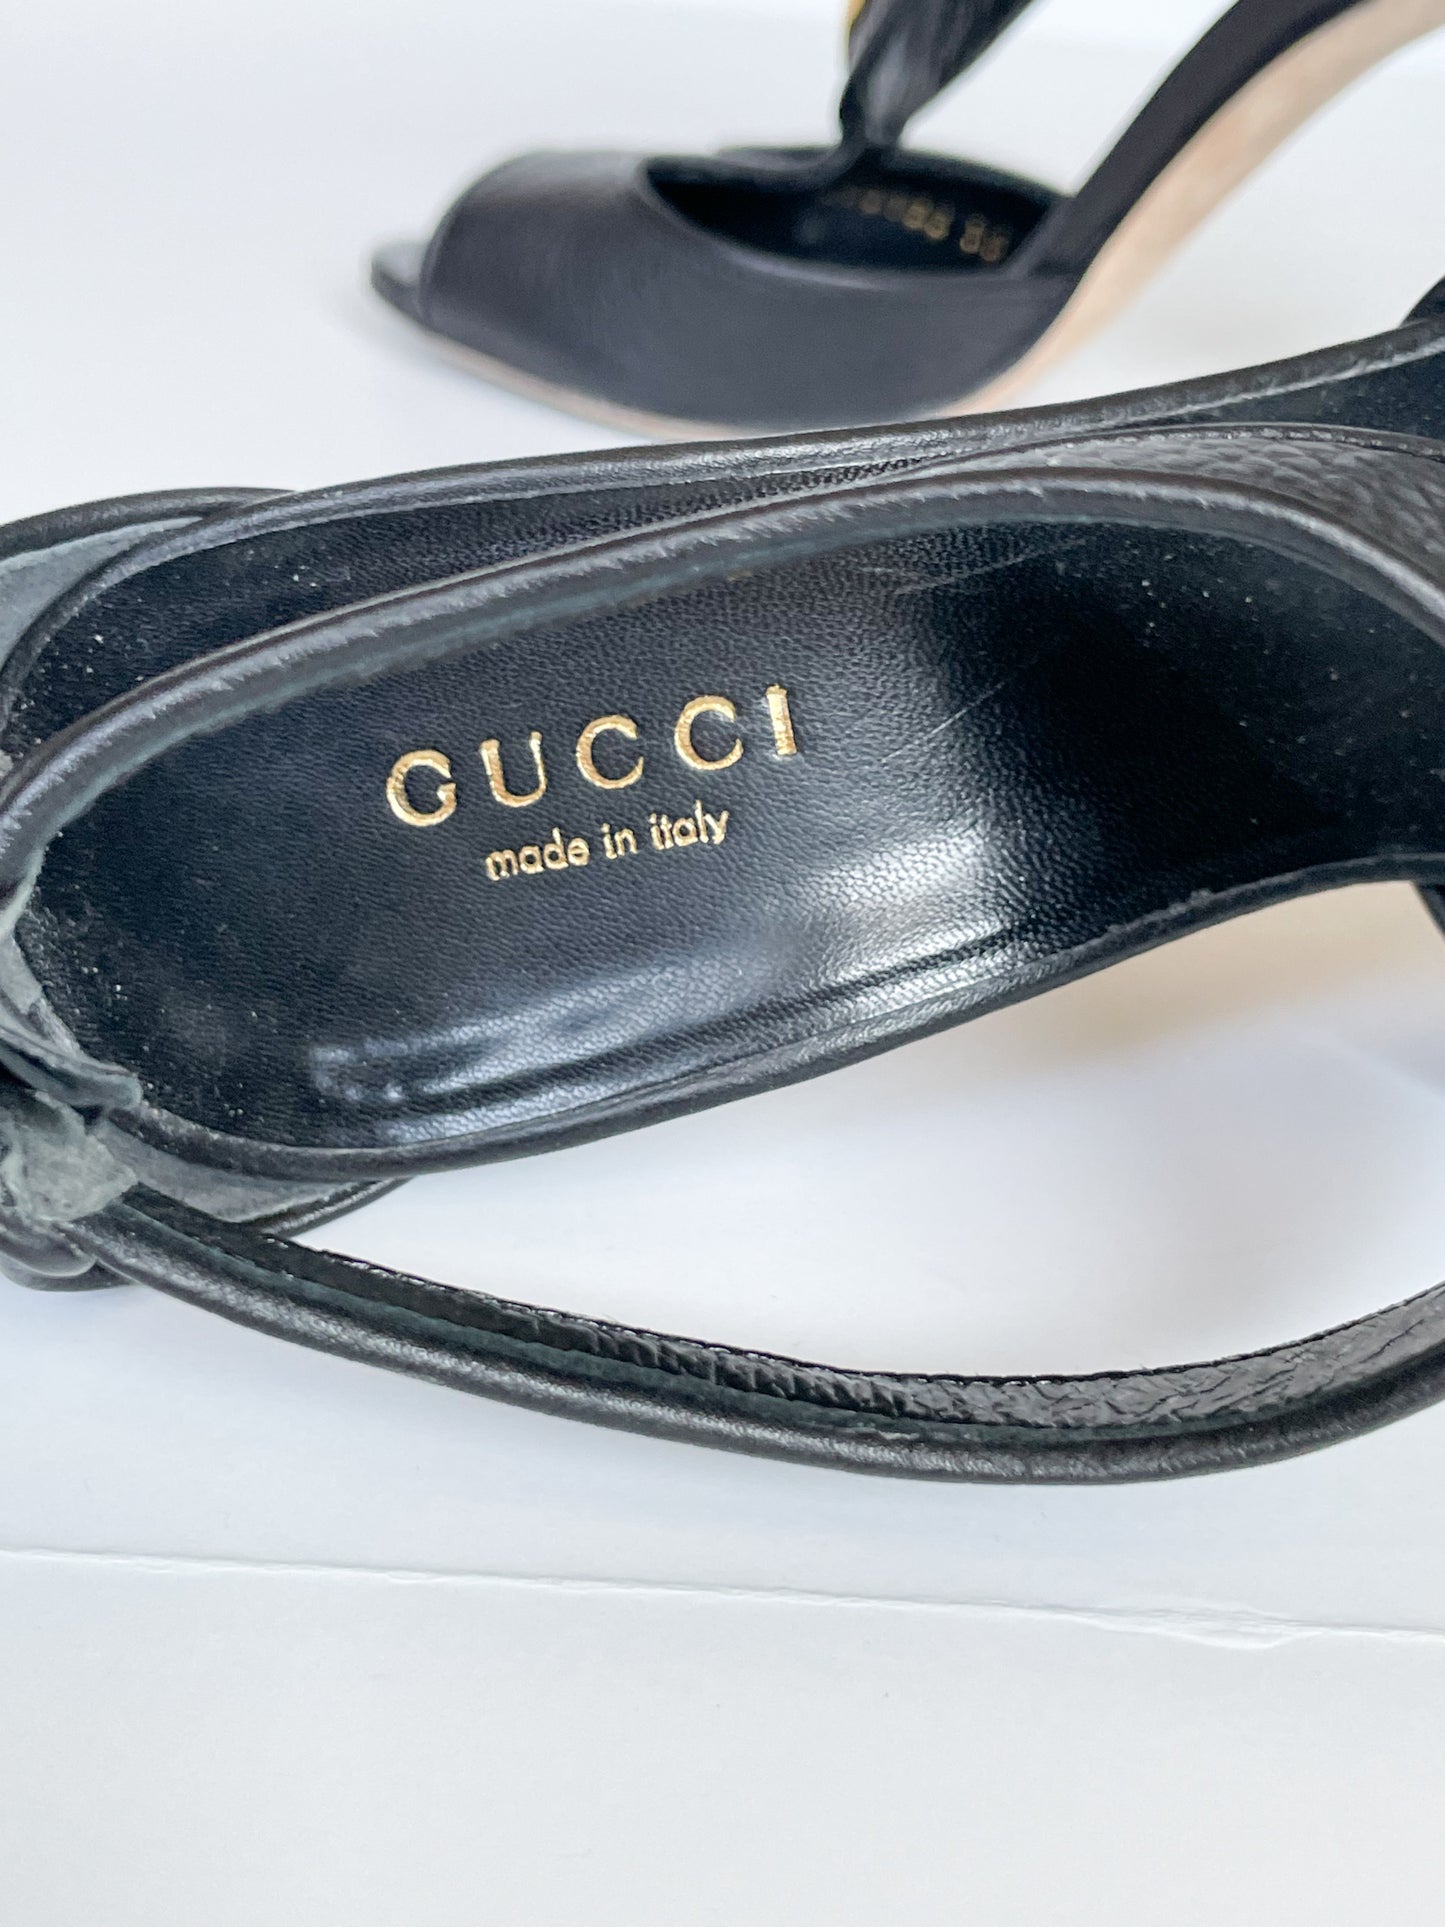 GUCCI Black Genuine Leather Logo Peeptoe 4" Heels - Size 35